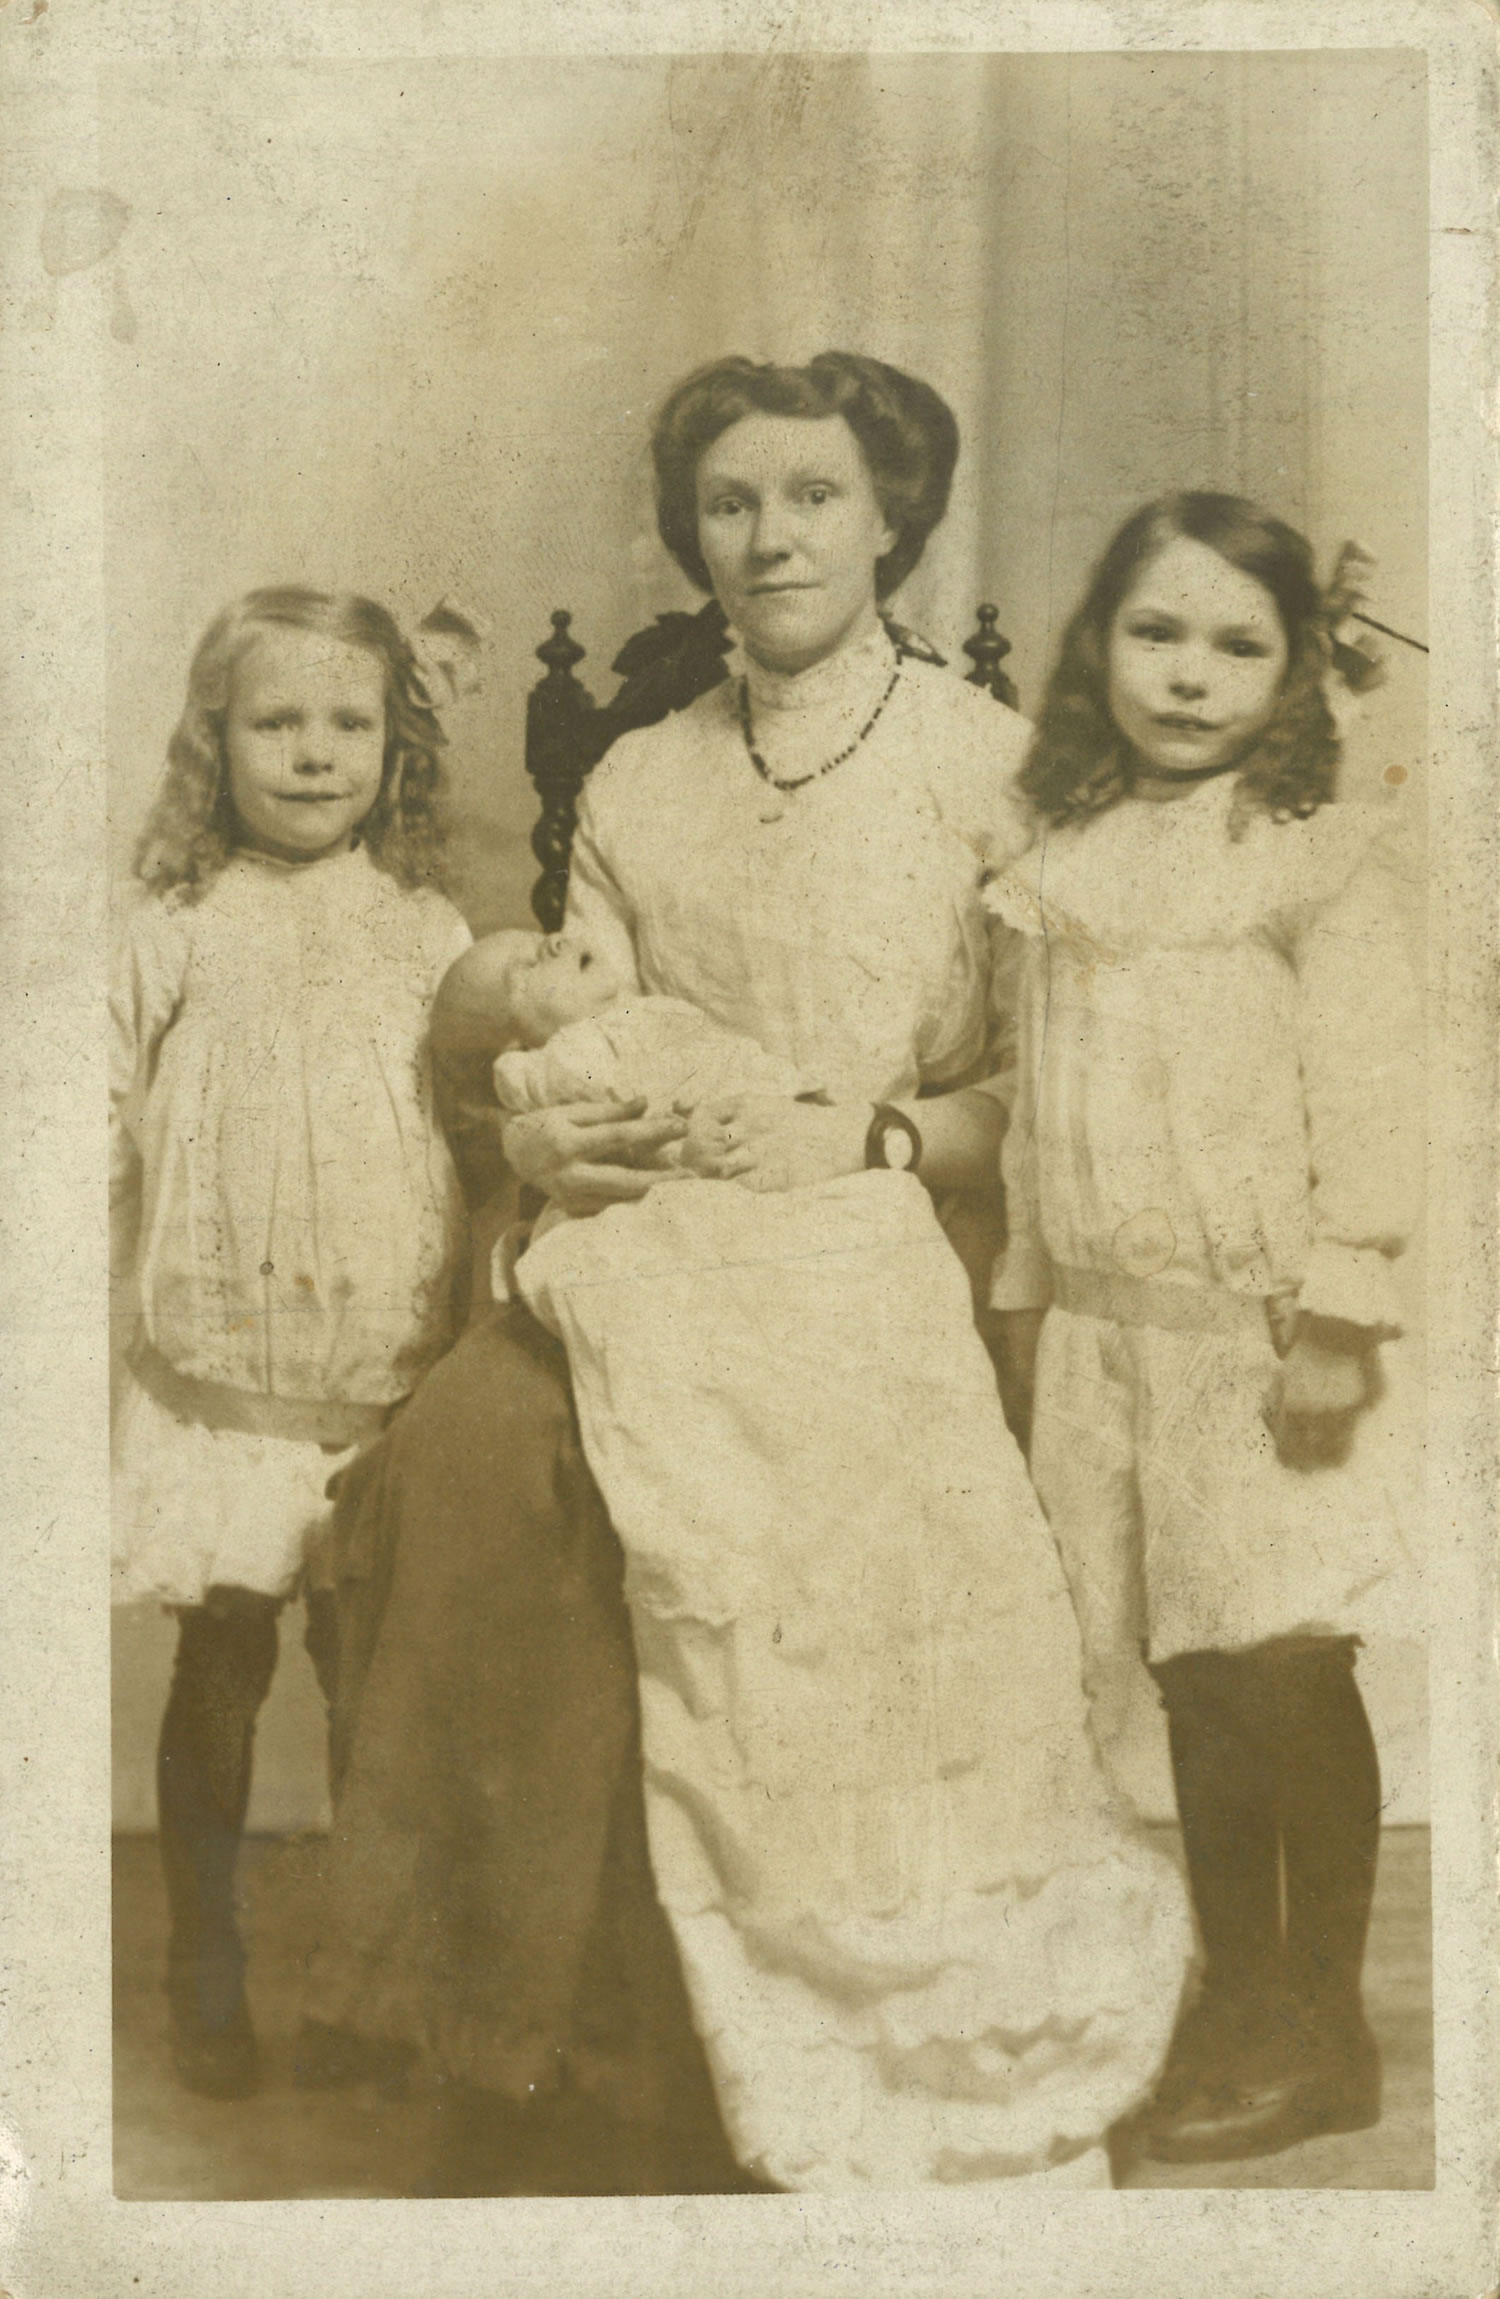 Harriet Beatrice Boorman (David Walliams' paternal great grandmother) with her 3 children, Ivy (David Walliams'
		grandmother), John and Louise - 1915